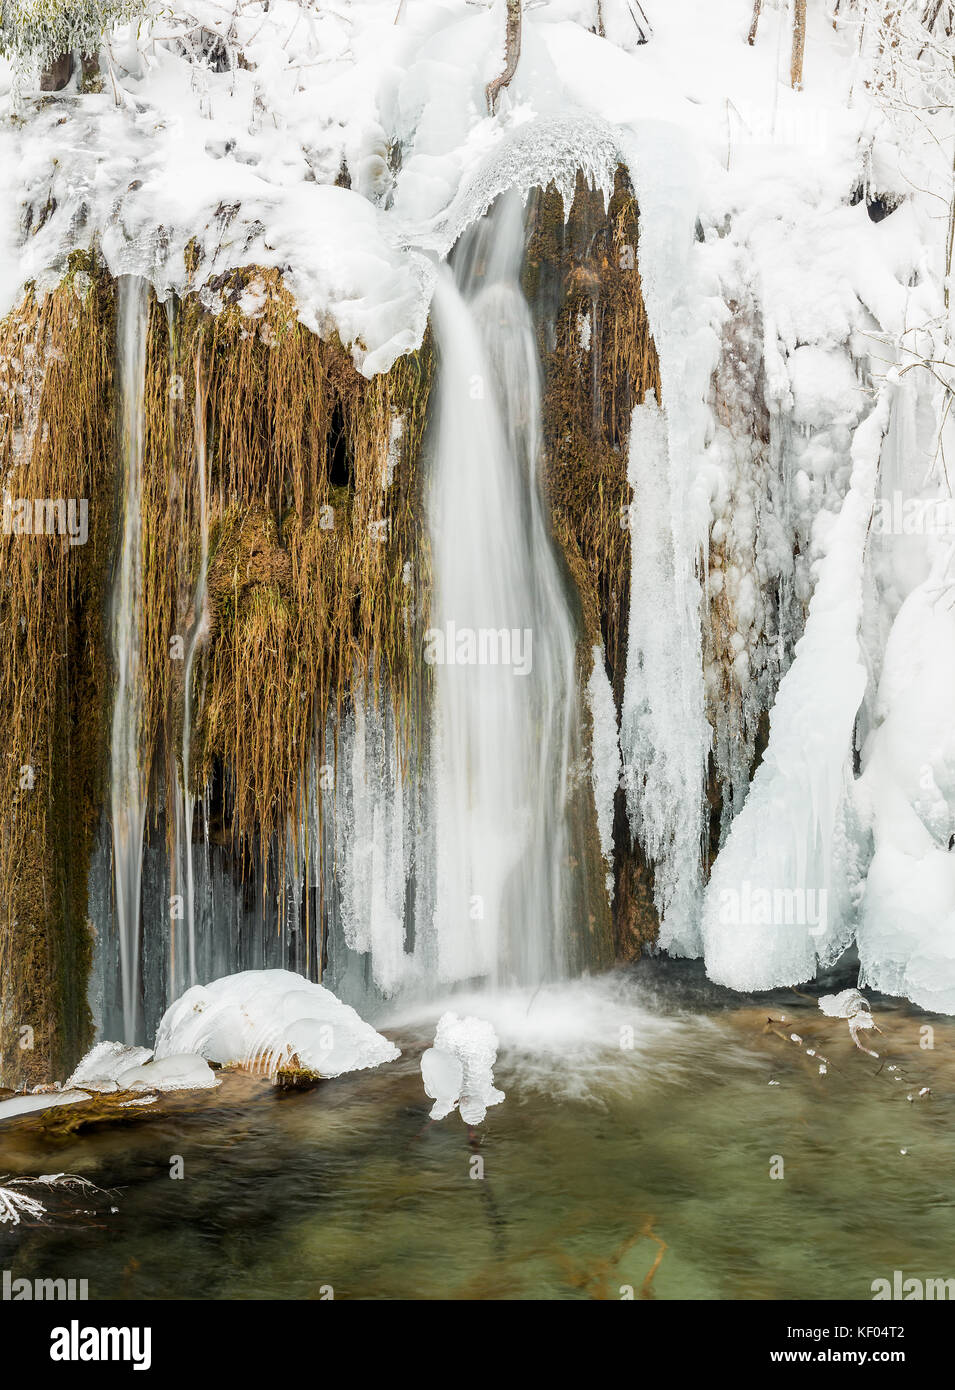 Water flows over tufa dams, Plitvice Lakes National Park, Croatia, January 2017 Stock Photo